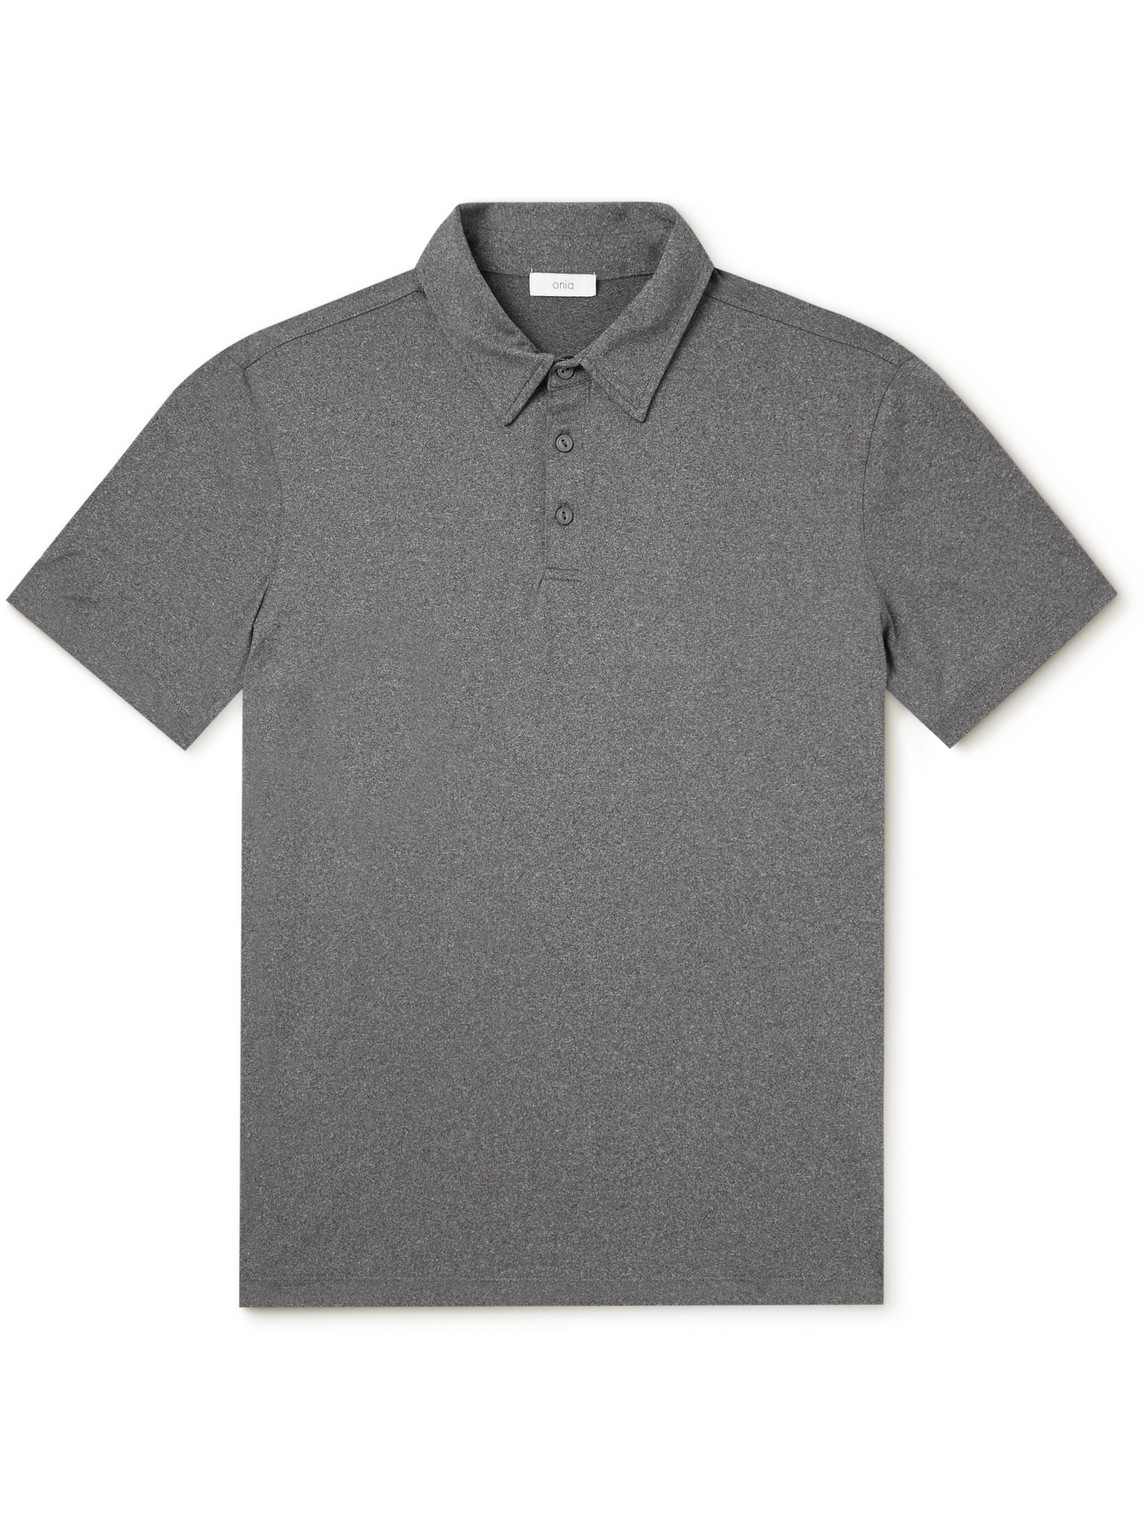 Onia - Everyday Ultralite Stretch-Jersey Polo Shirt - Men - Gray - L von Onia